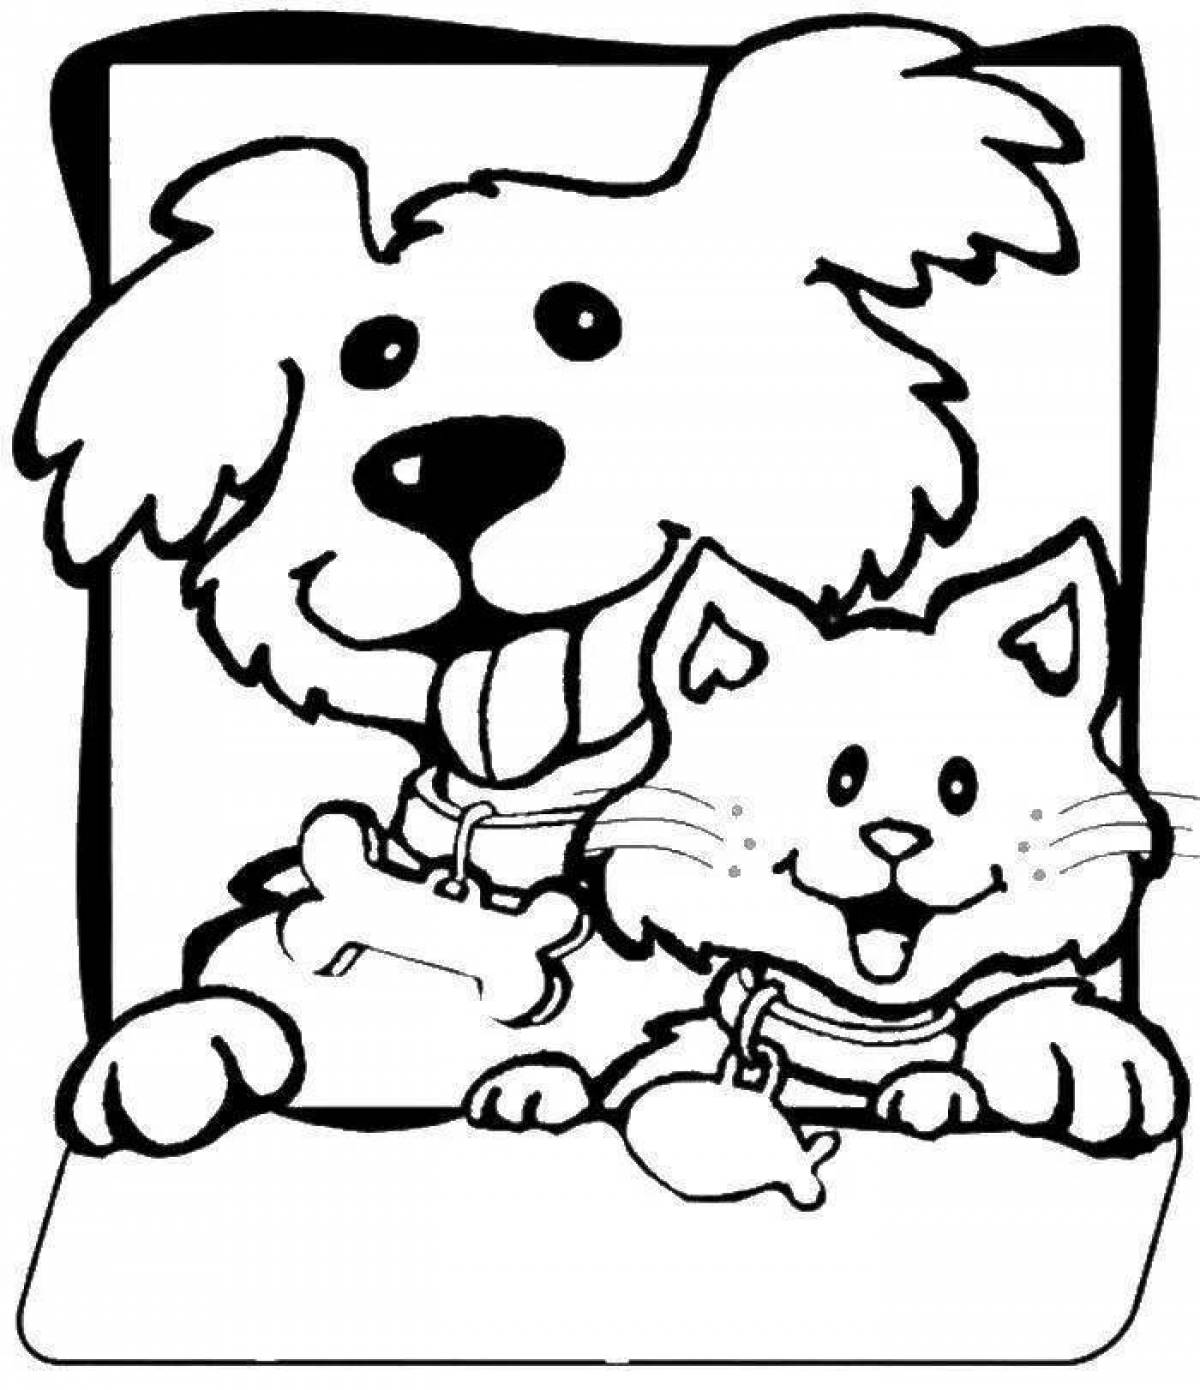 Fun cat and dog coloring book